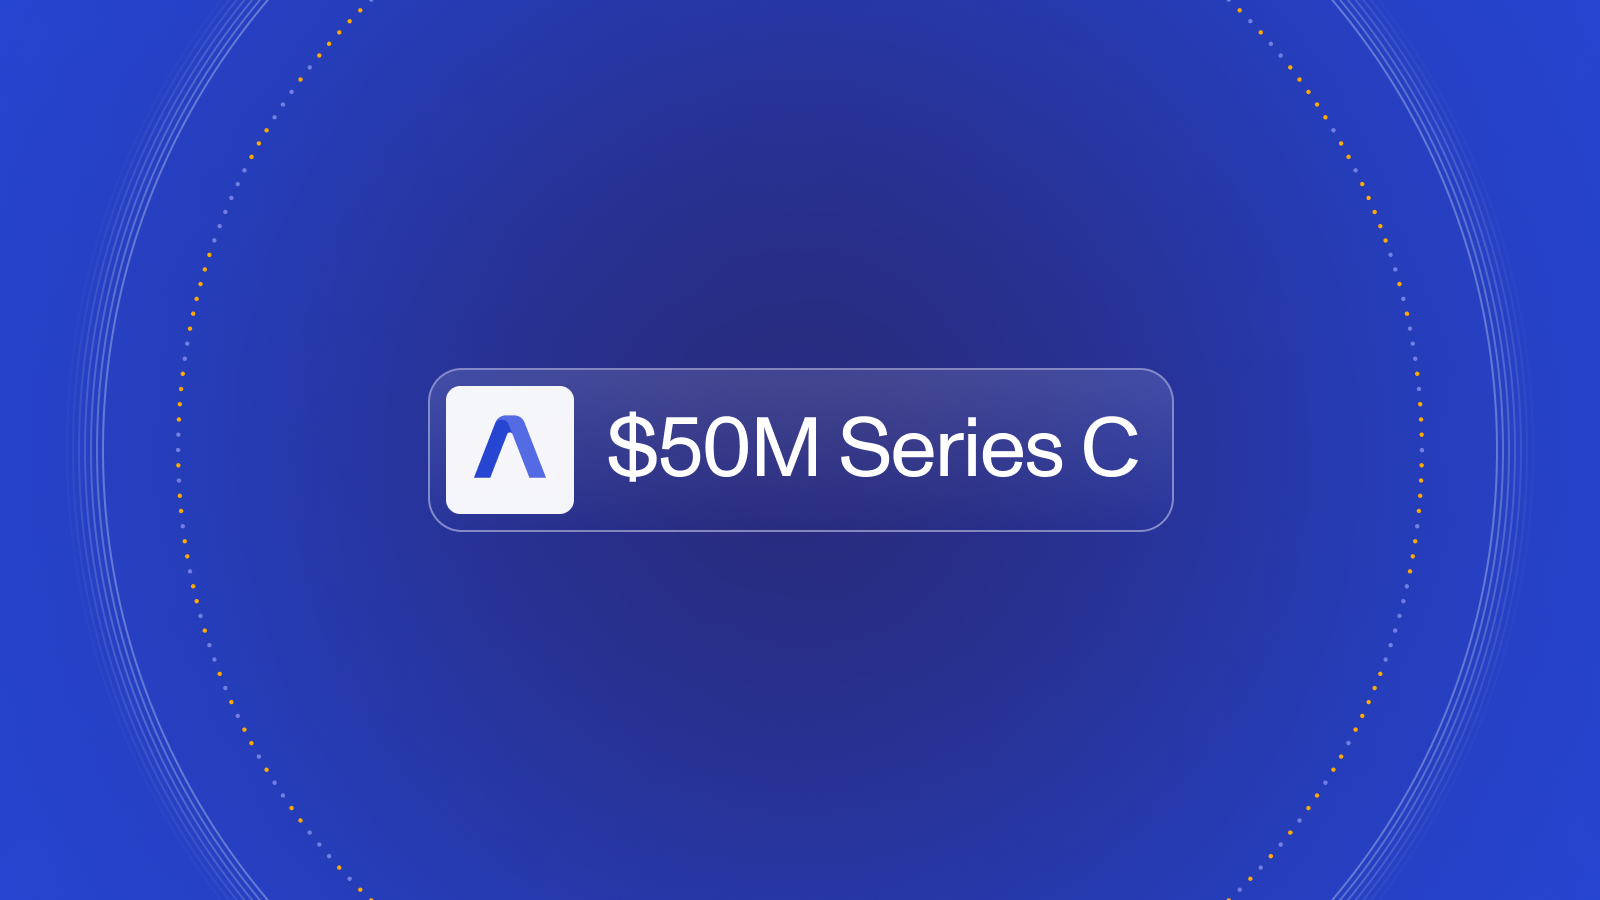 Announcing our $50M Series C to build superhuman Speech AI models